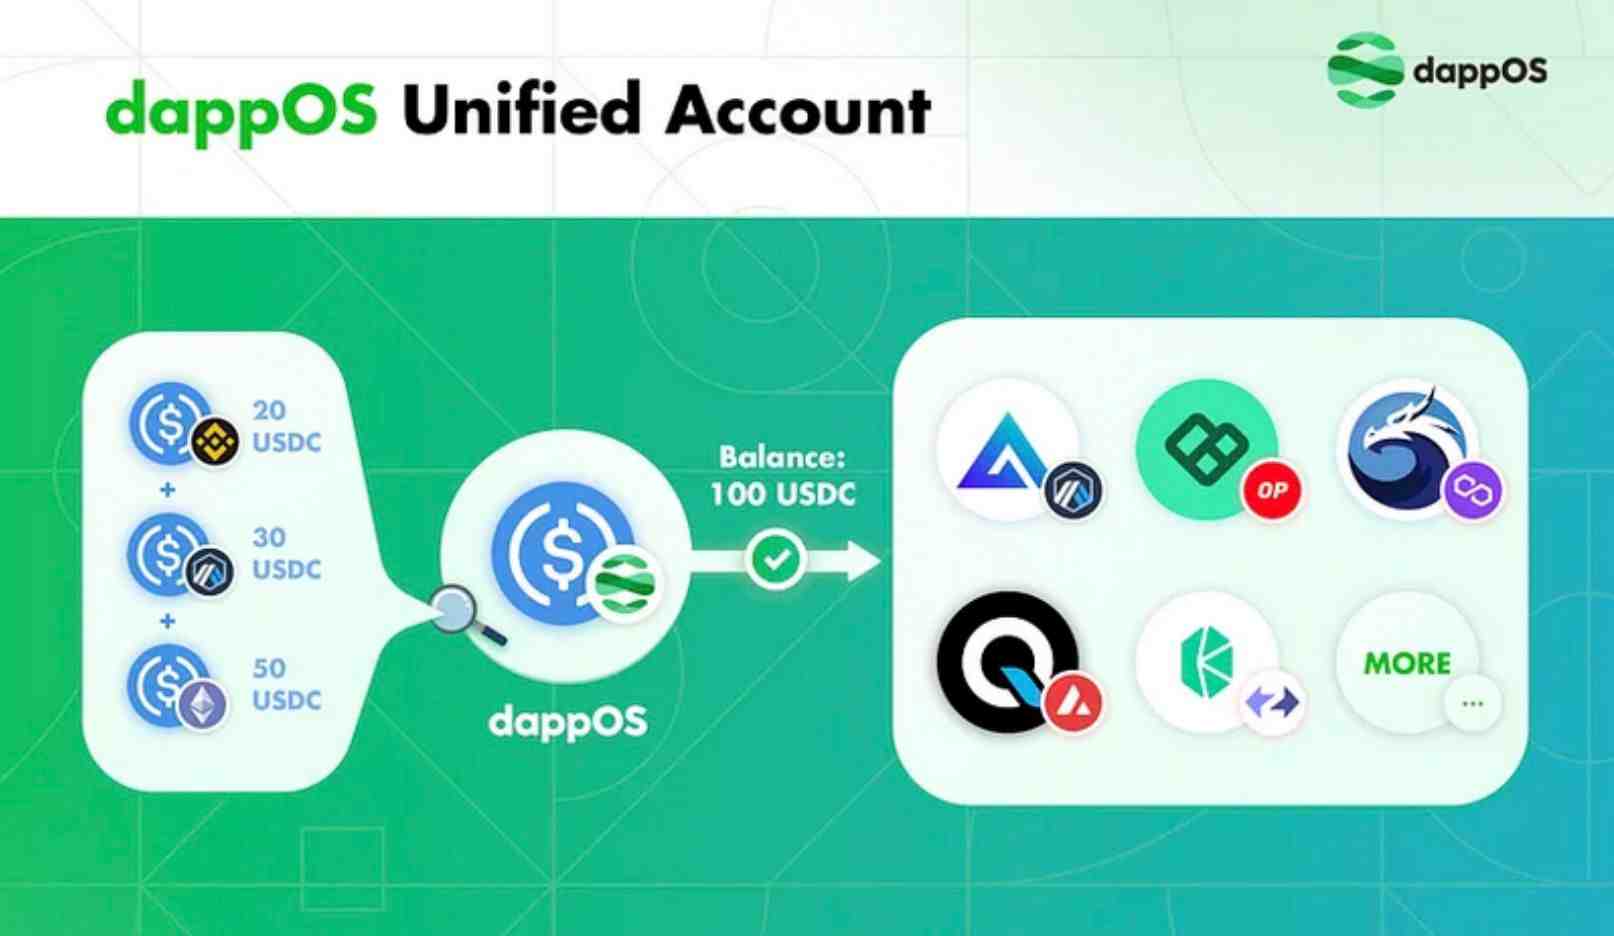 dappos unified account.jpg